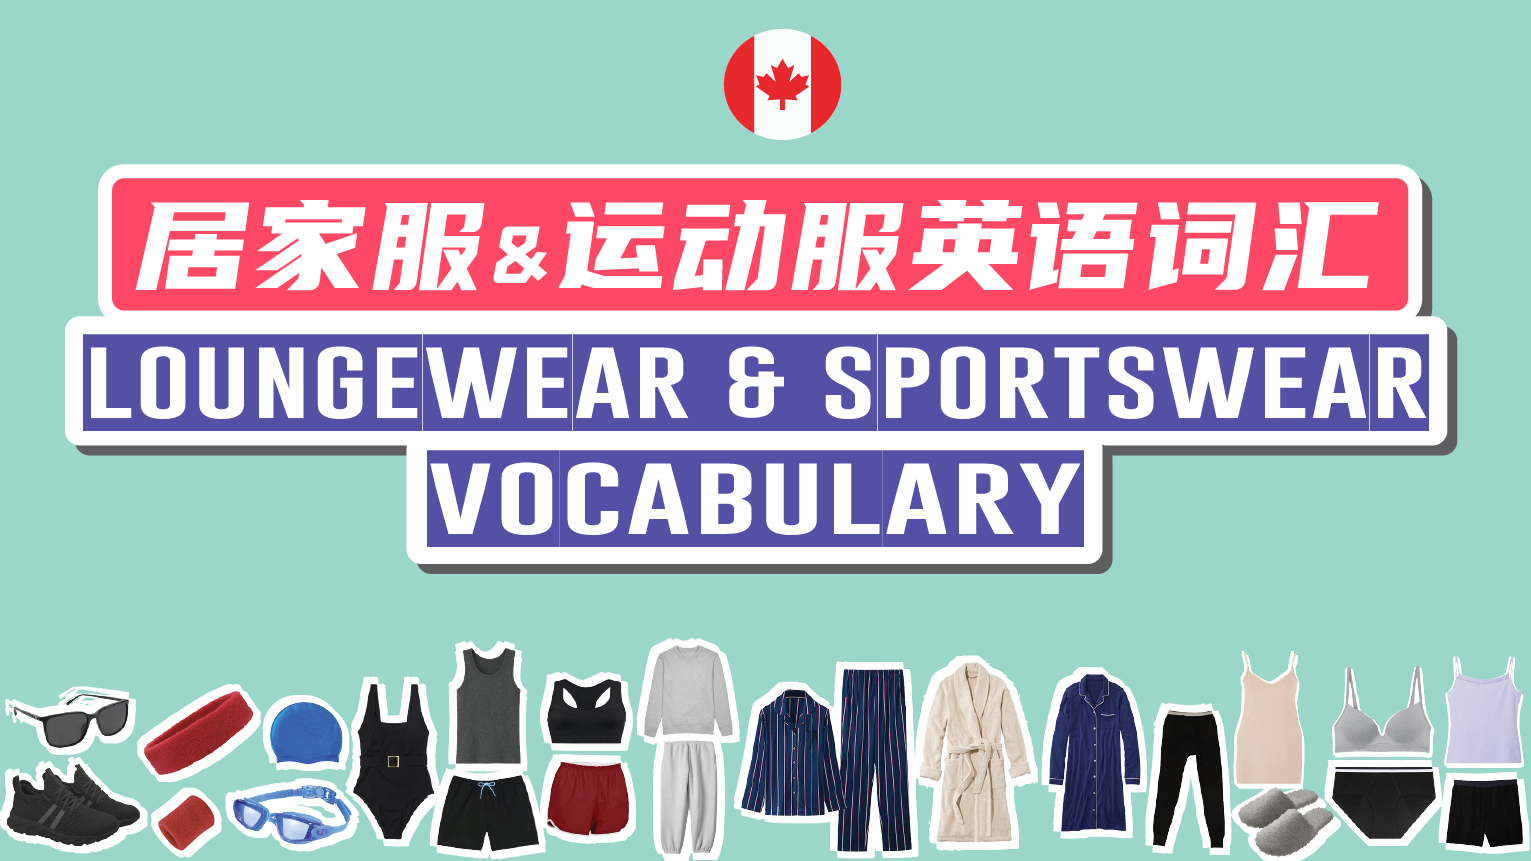 Loungewear and Sportswear Vocabulary